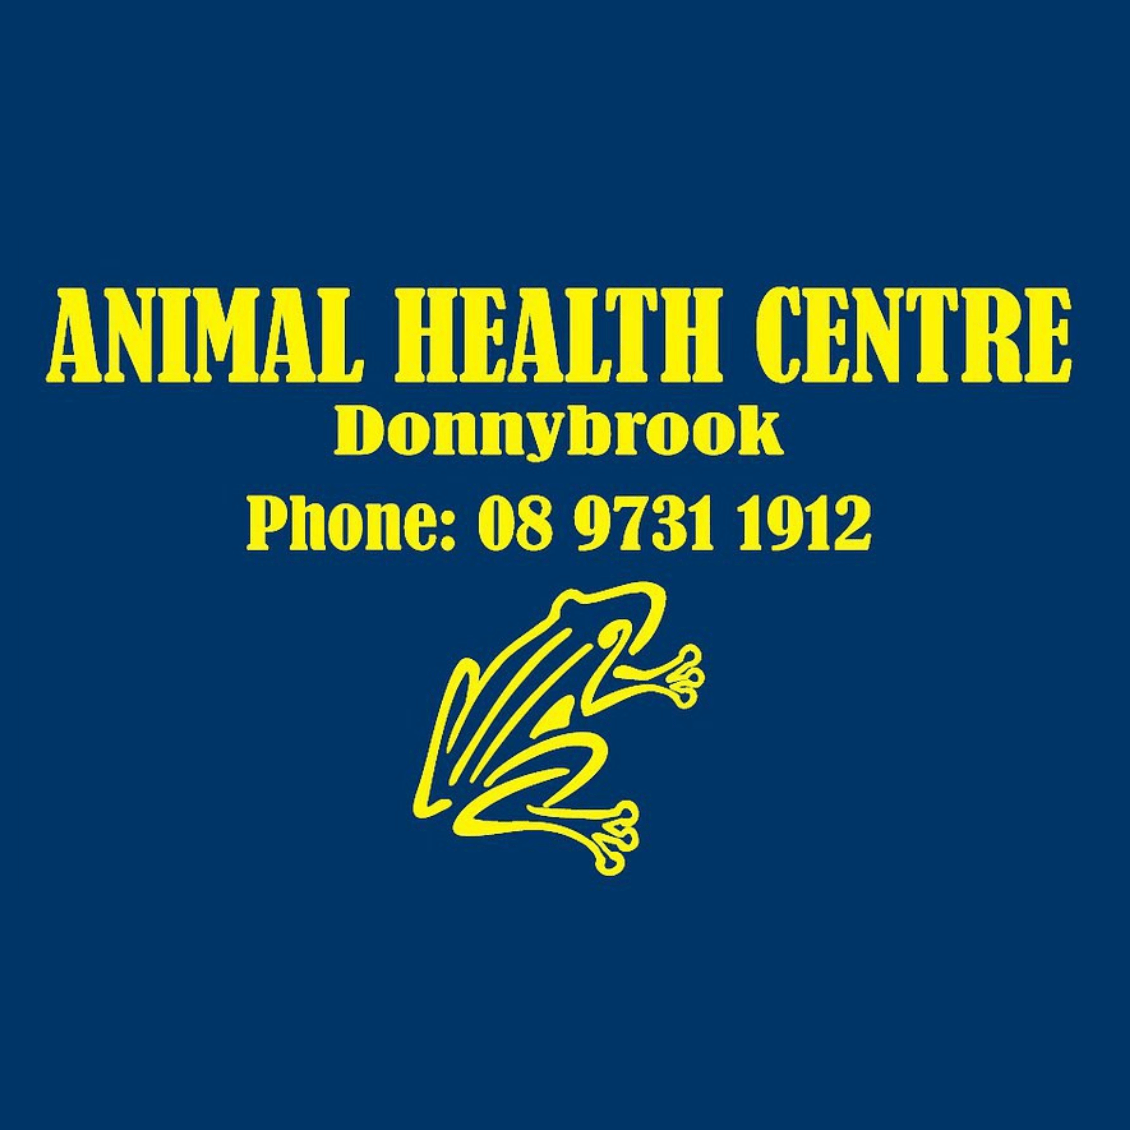 Shop Local Animal Health Centre